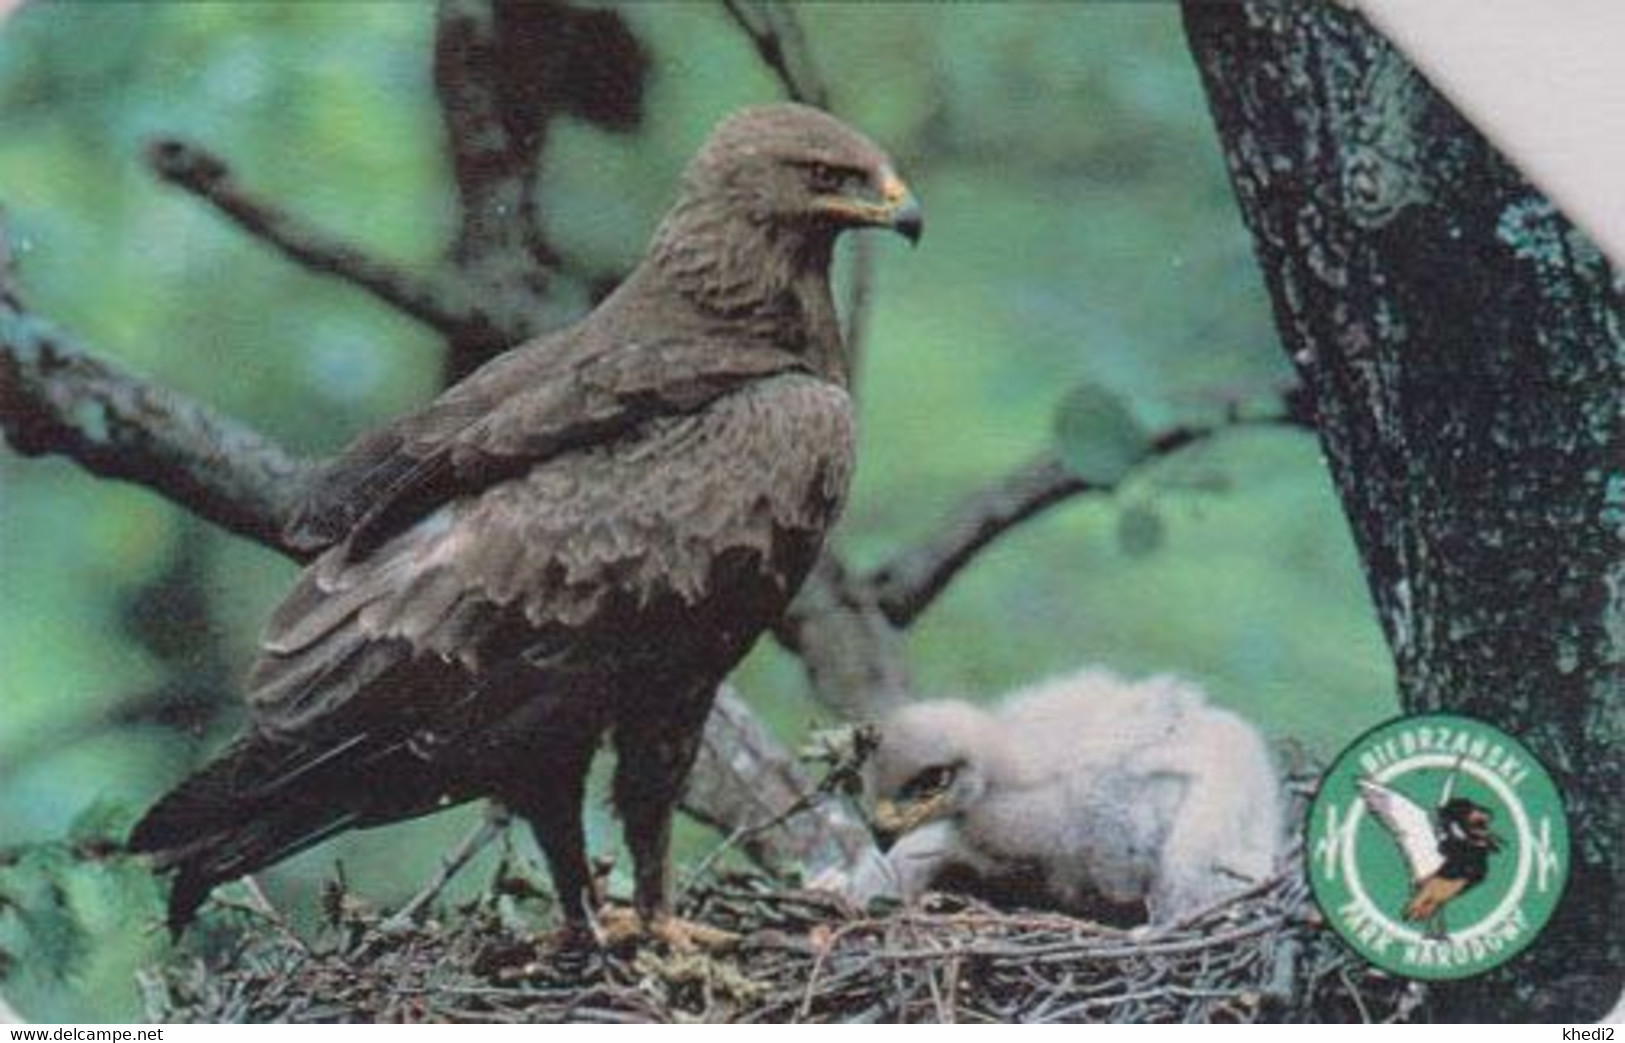 TC POLOGNE - ANIMAL / Série Bierbrzanski Park 4/10 - OISEAU AIGLE POMARIN Au Nid - EAGLE BIRD POLAND Phonecard - BE 5525 - Aigles & Rapaces Diurnes